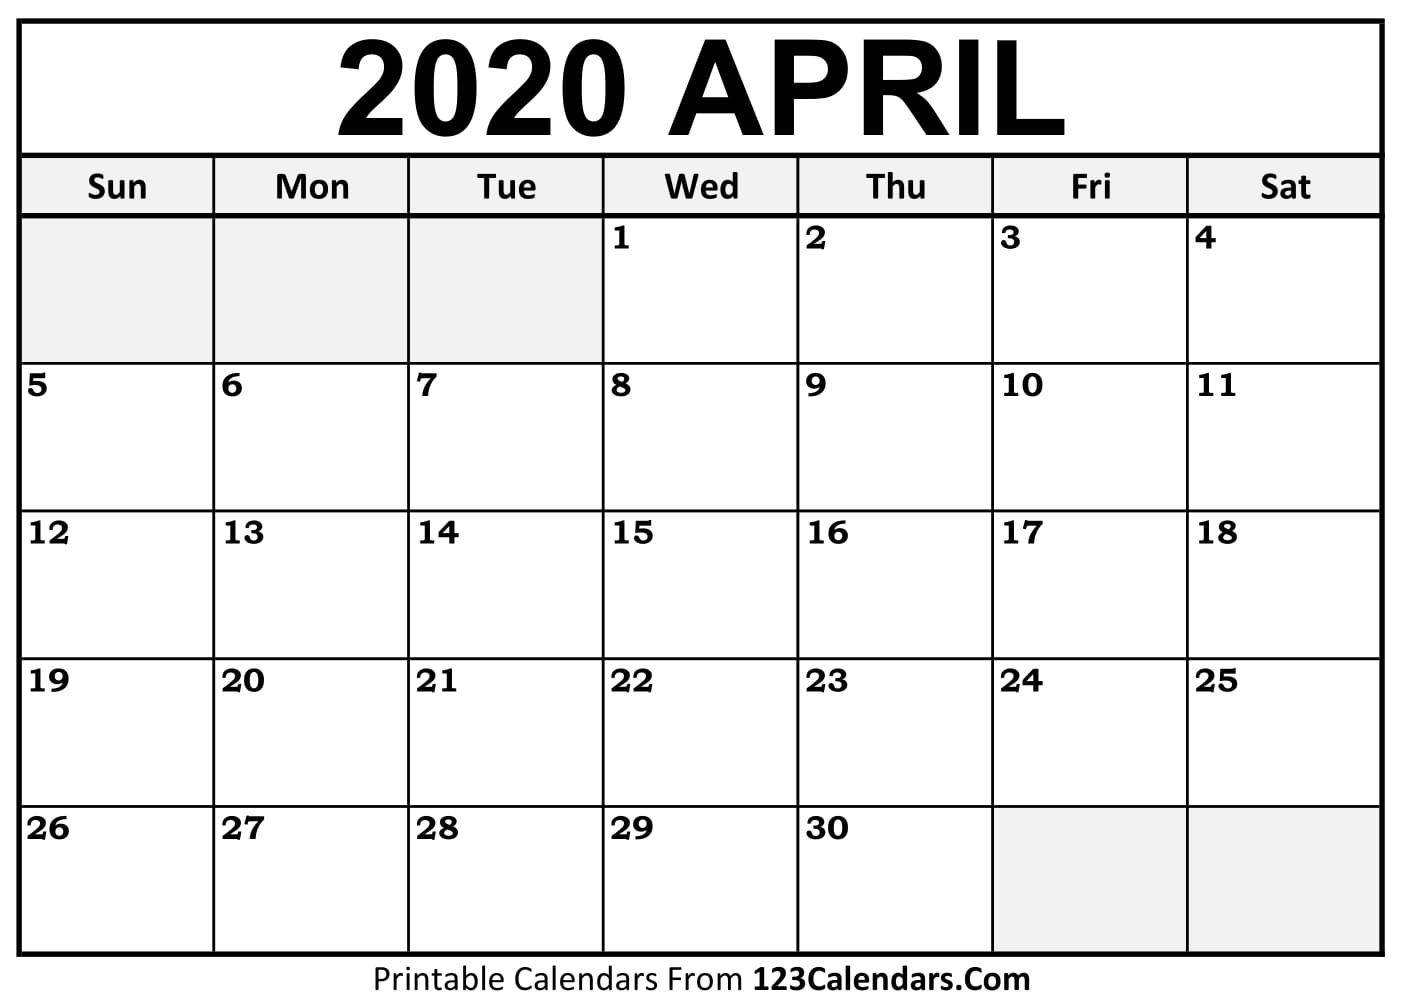 April 2020 Printable Calendar | 123Calendars